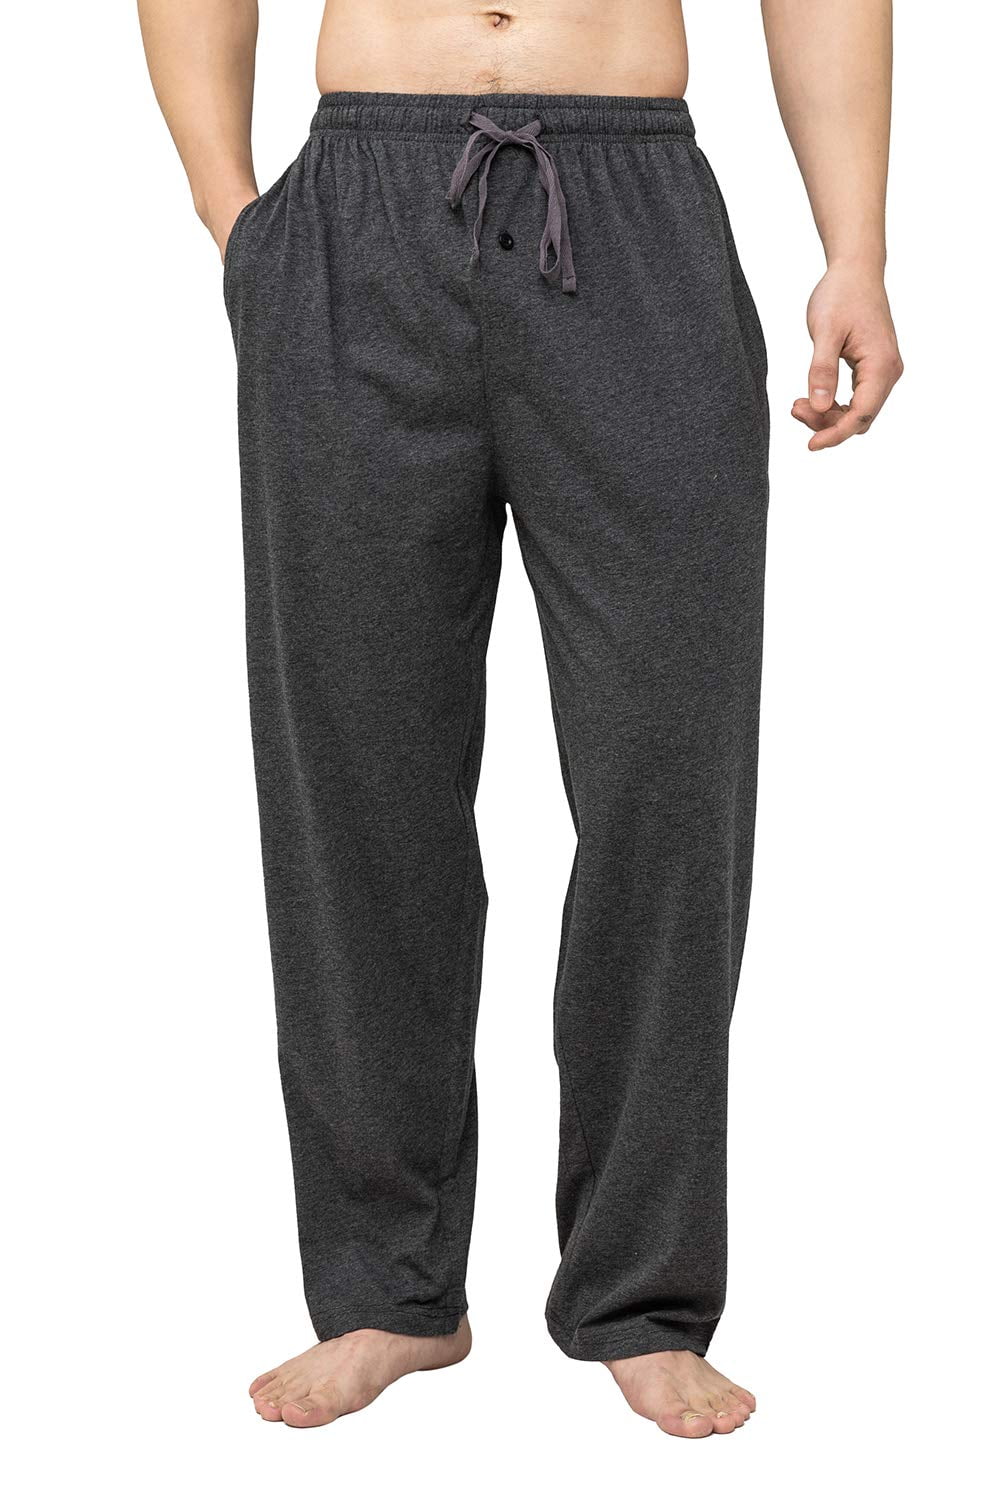 Bintangor Mens Pajama Sleep Pants 100% Cotton Knit Elastic Wear Long ...